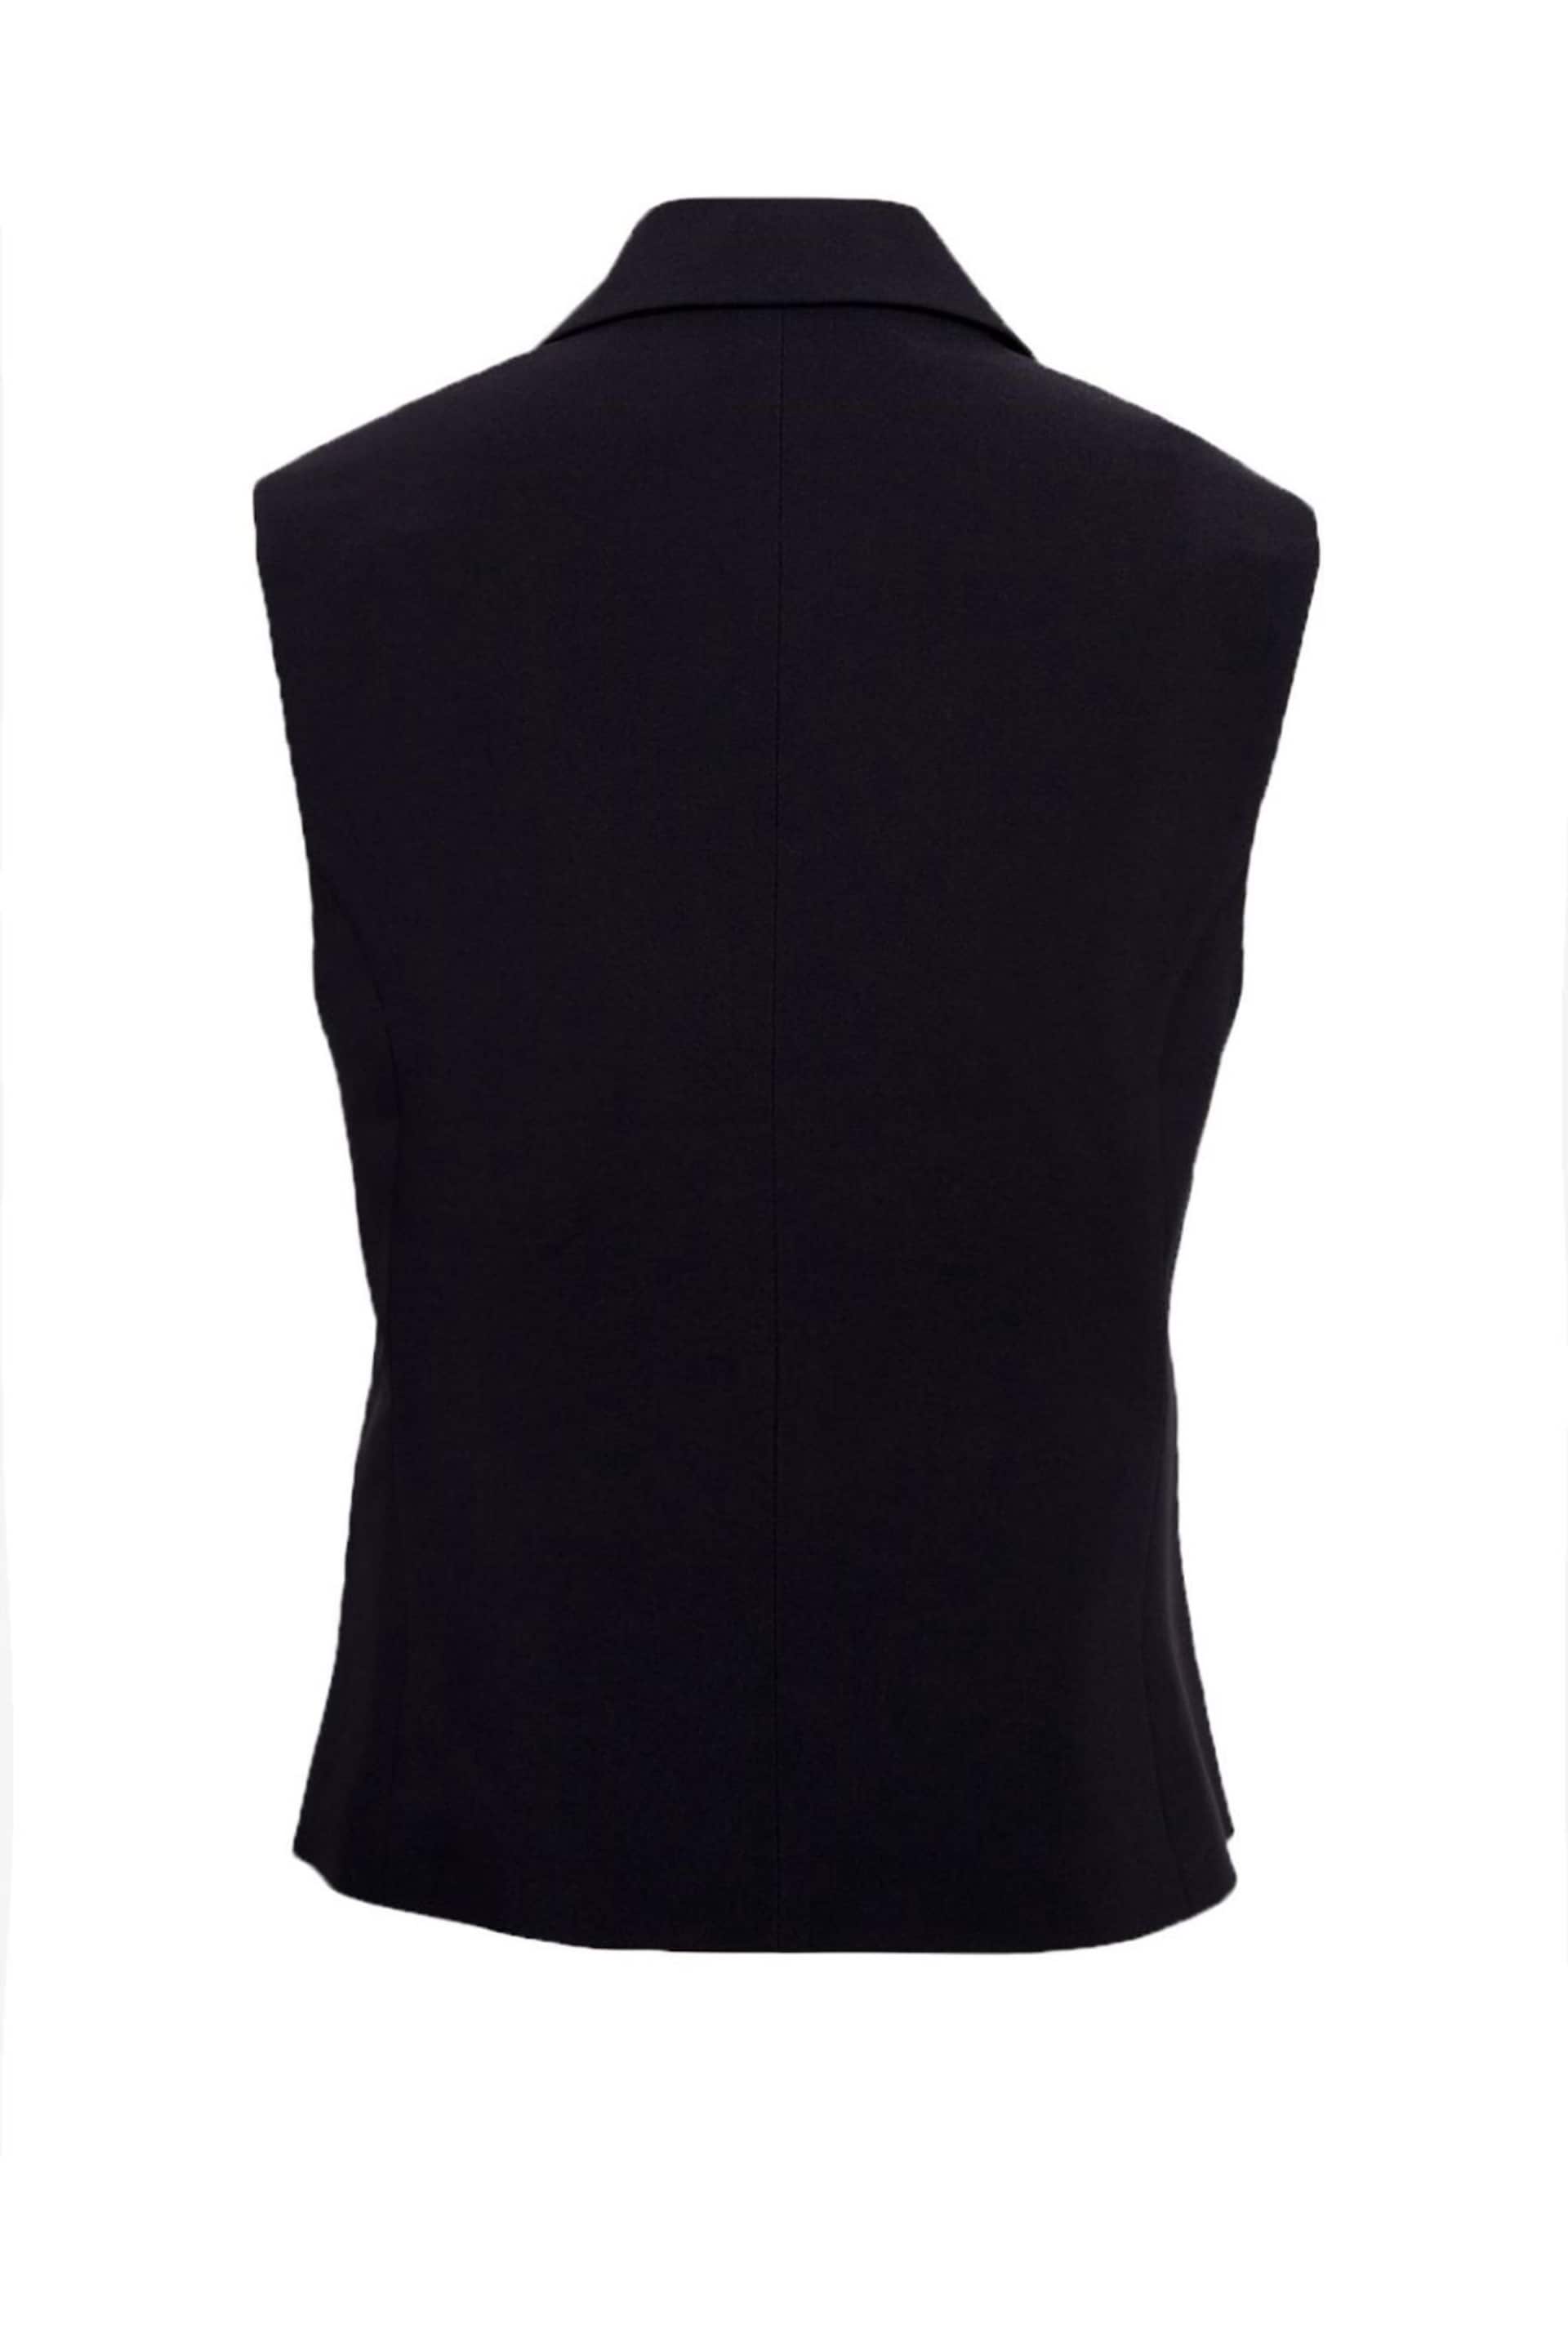 Another Sunday Sleeveless Button Through Black Waistcoat - Image 5 of 5